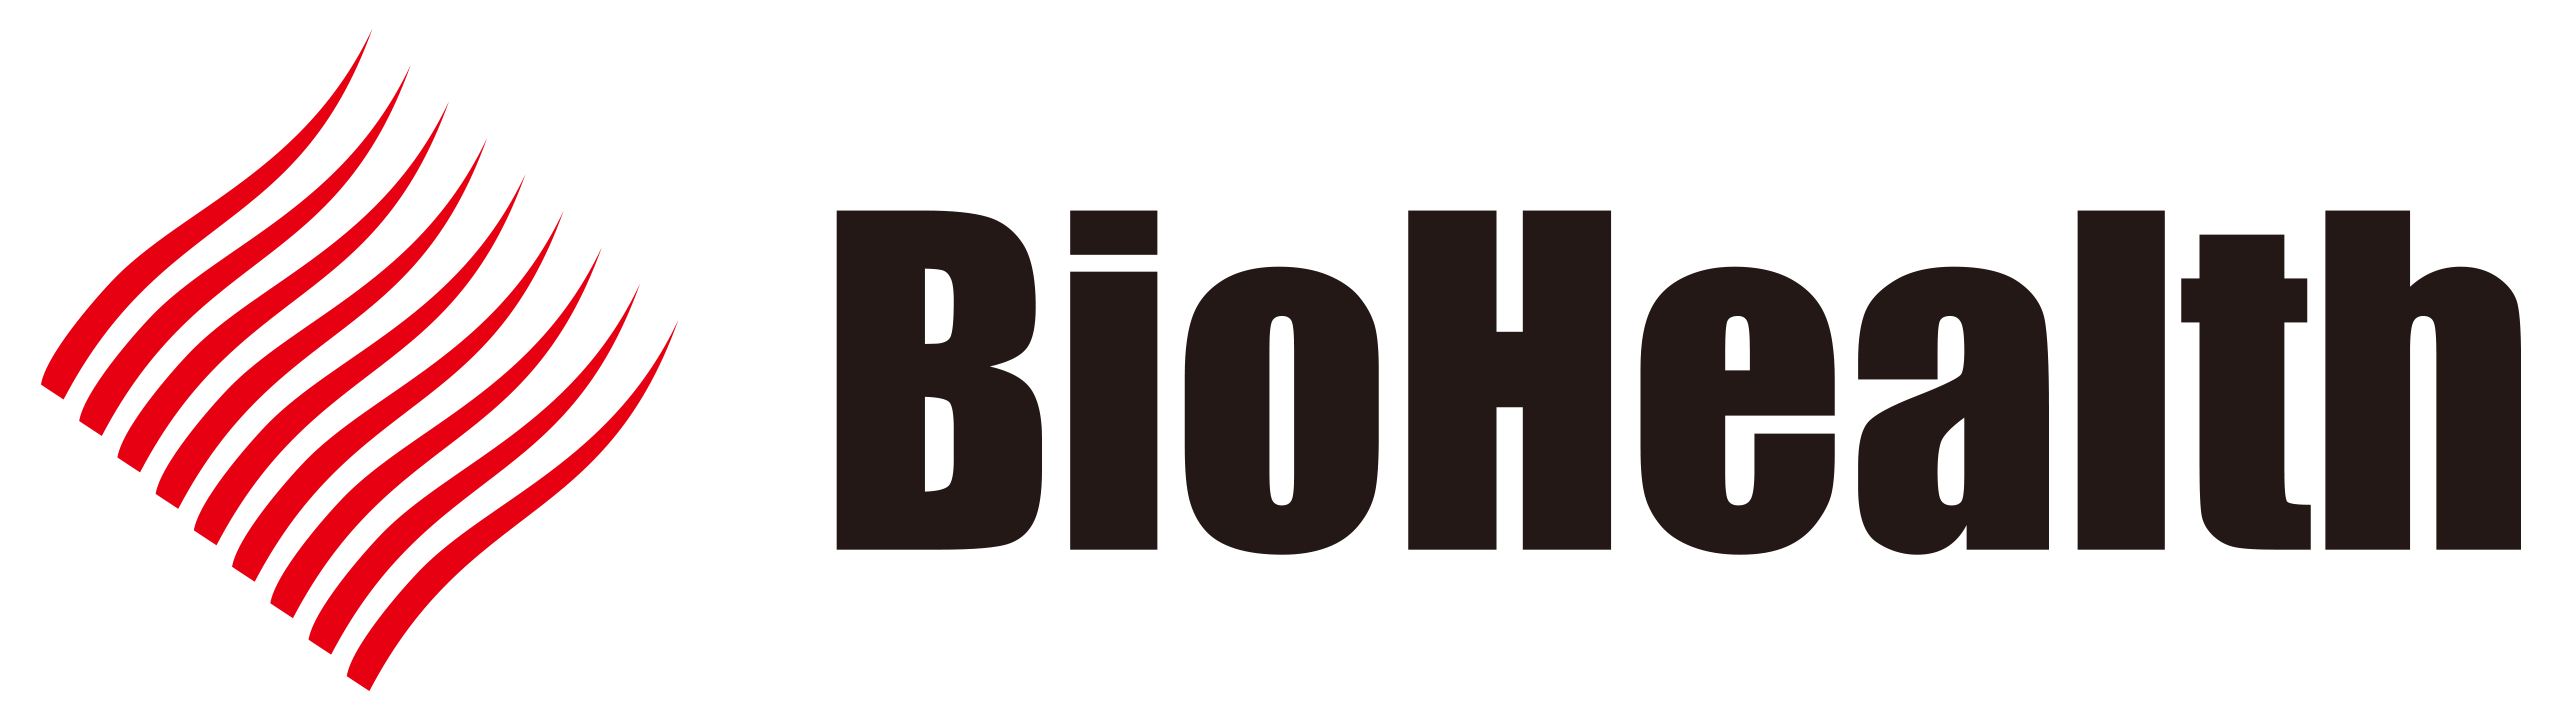 BioHealth Medical Technology Co., Ltd.